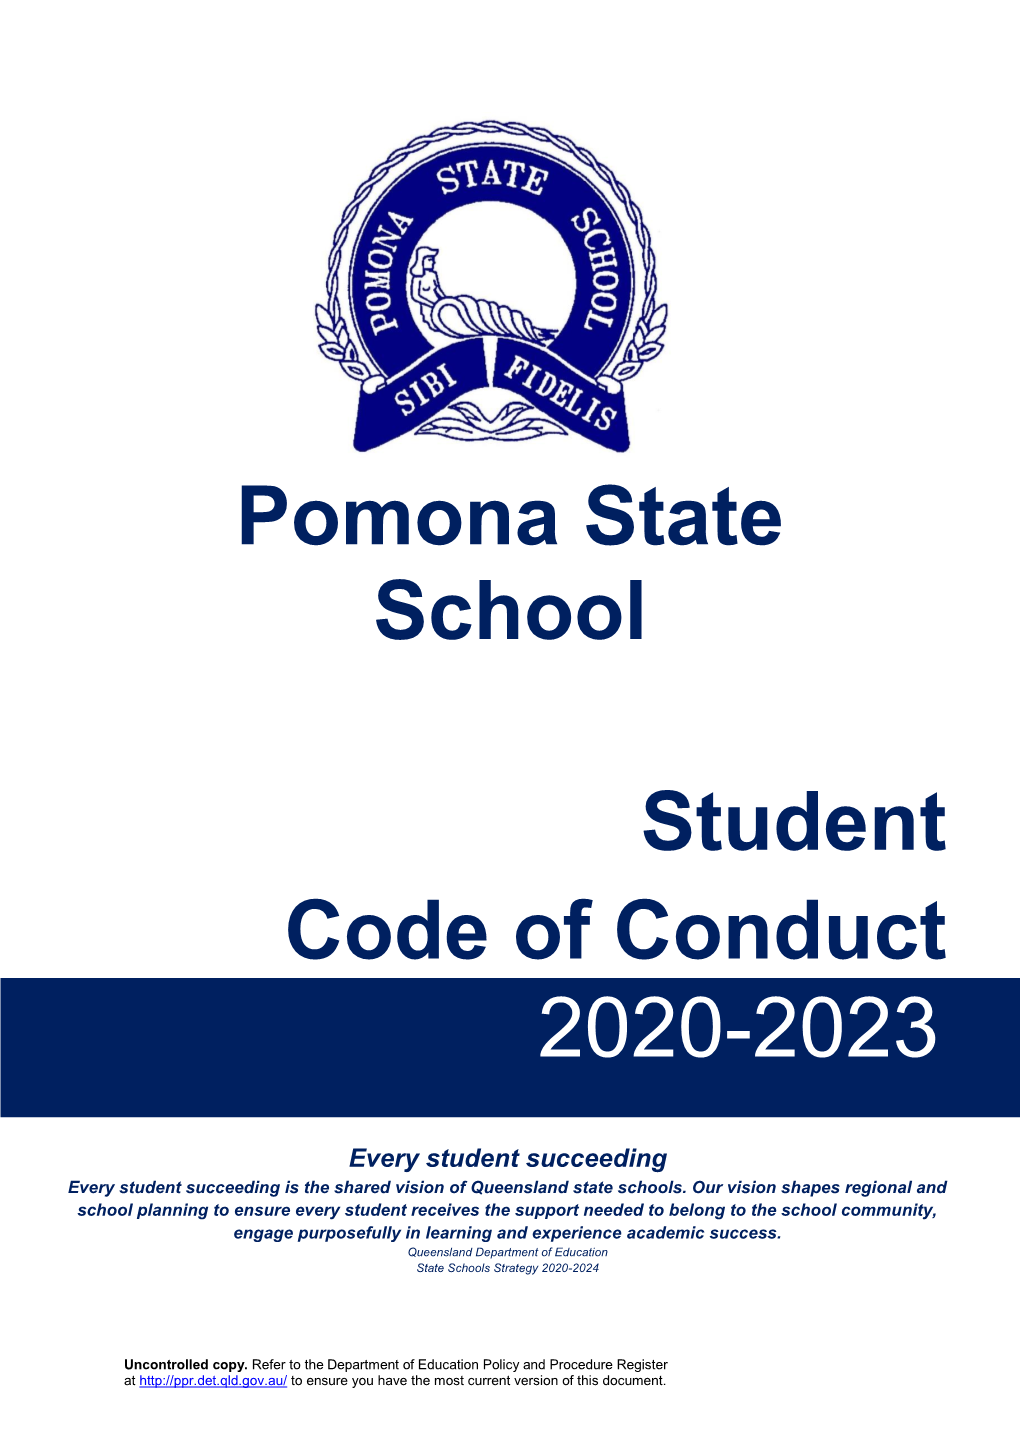 Pomona State School Student Code of Conduct